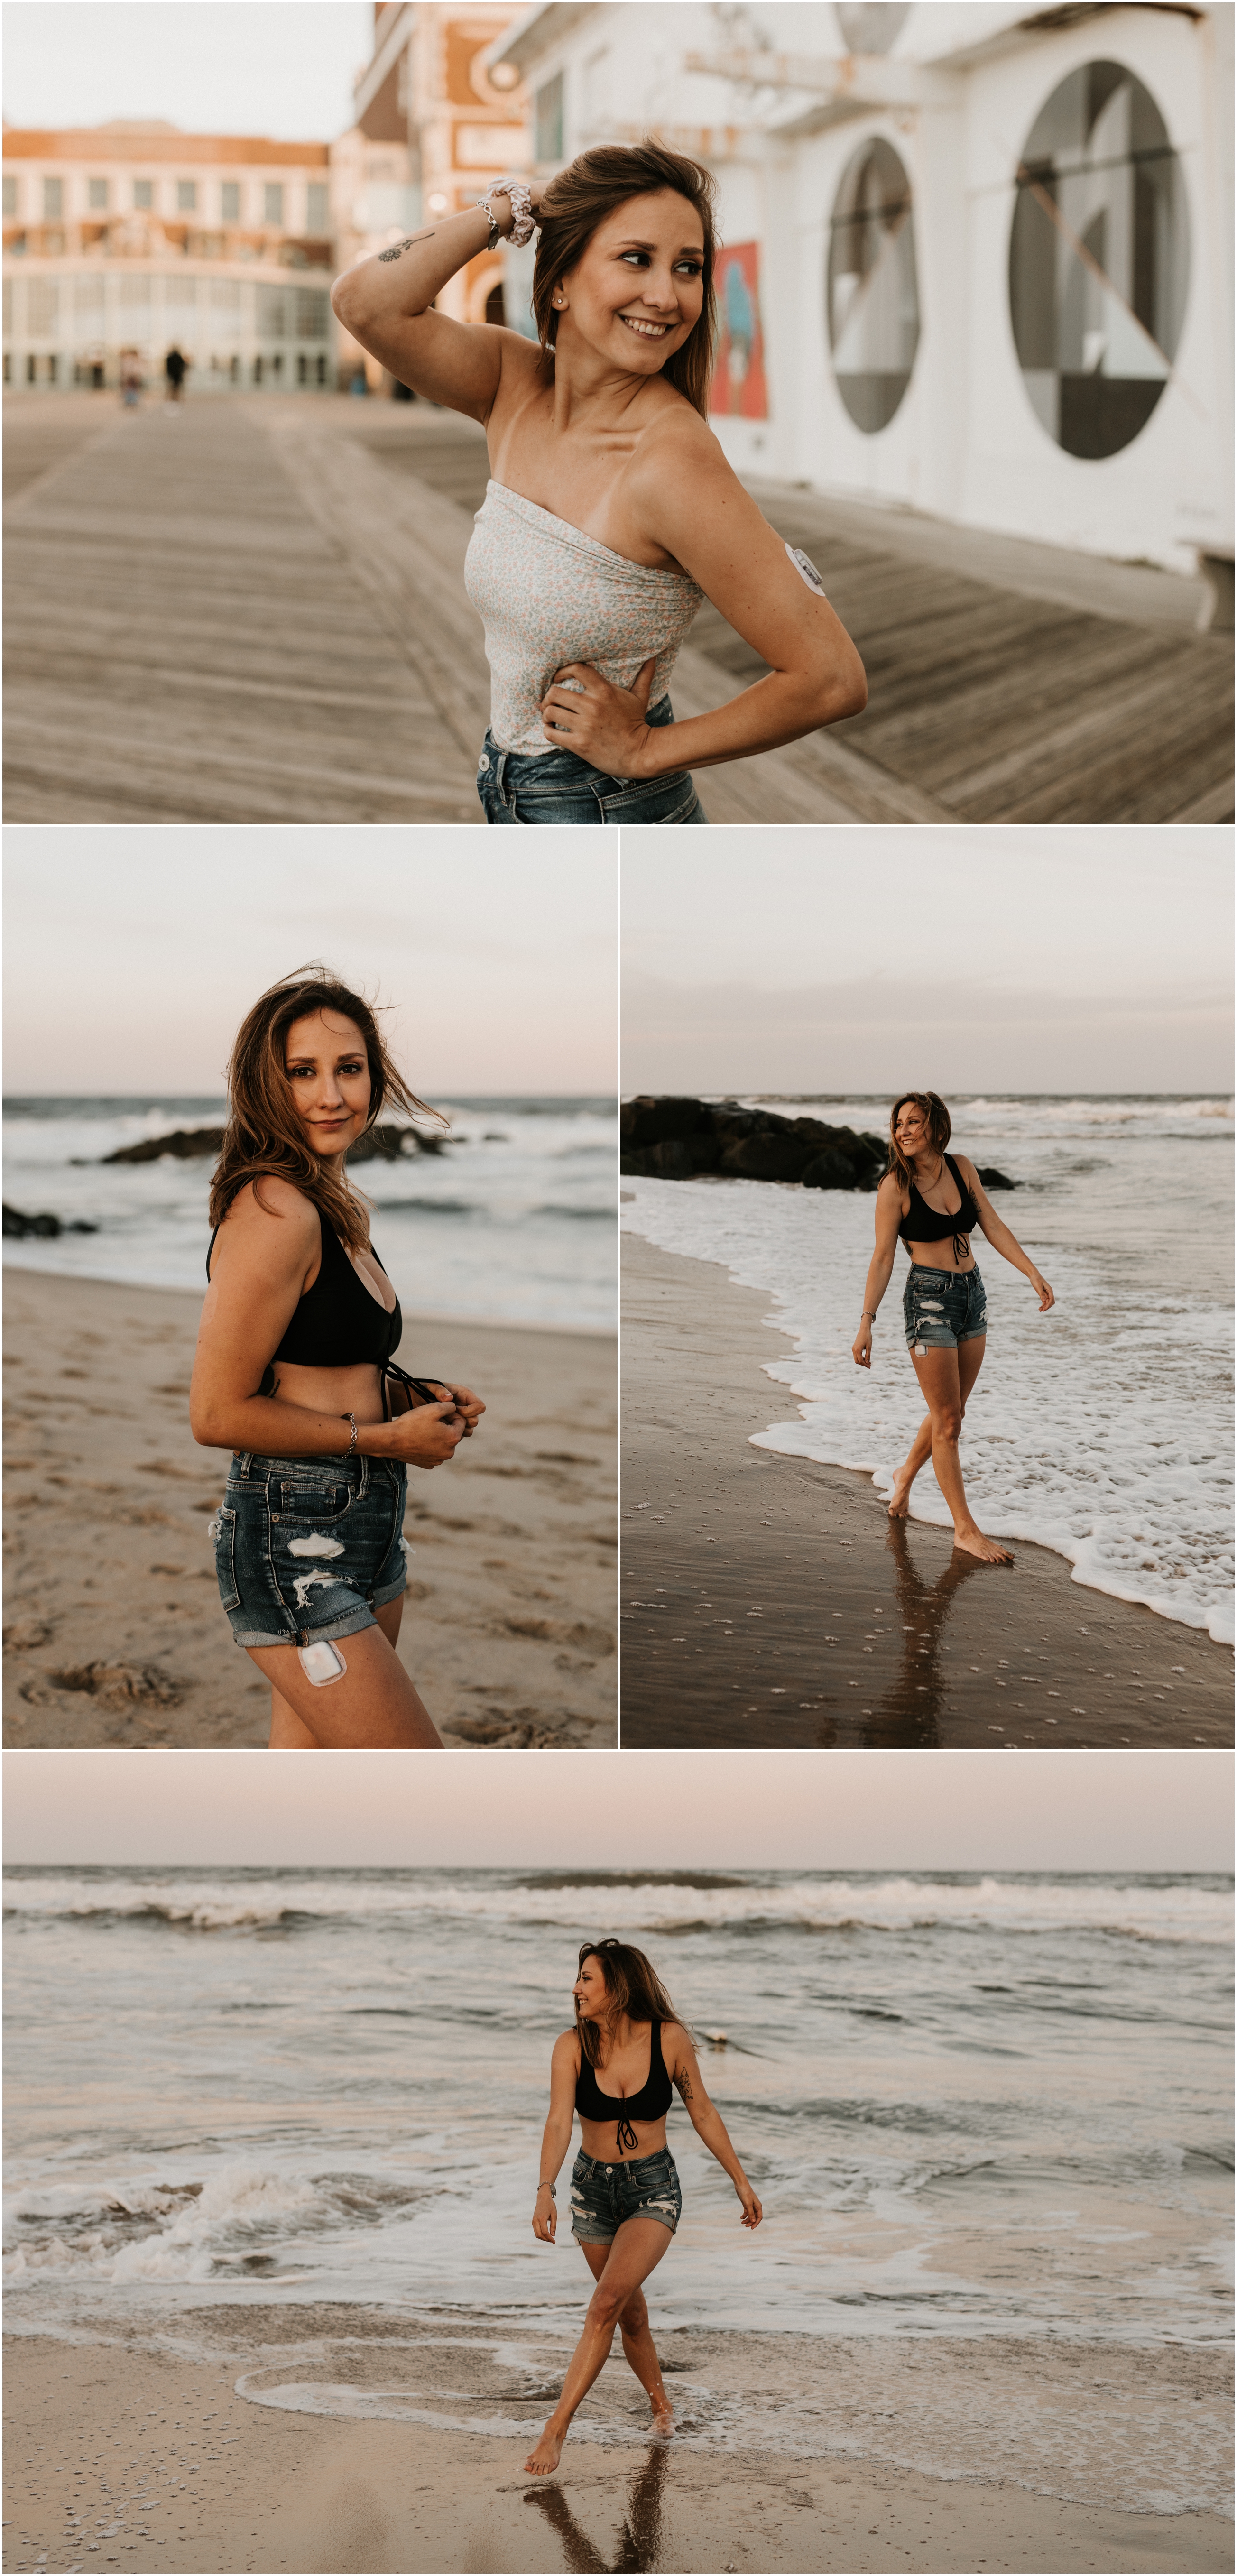 girl modeling in bikini on beach and showing diabetes insulin patch